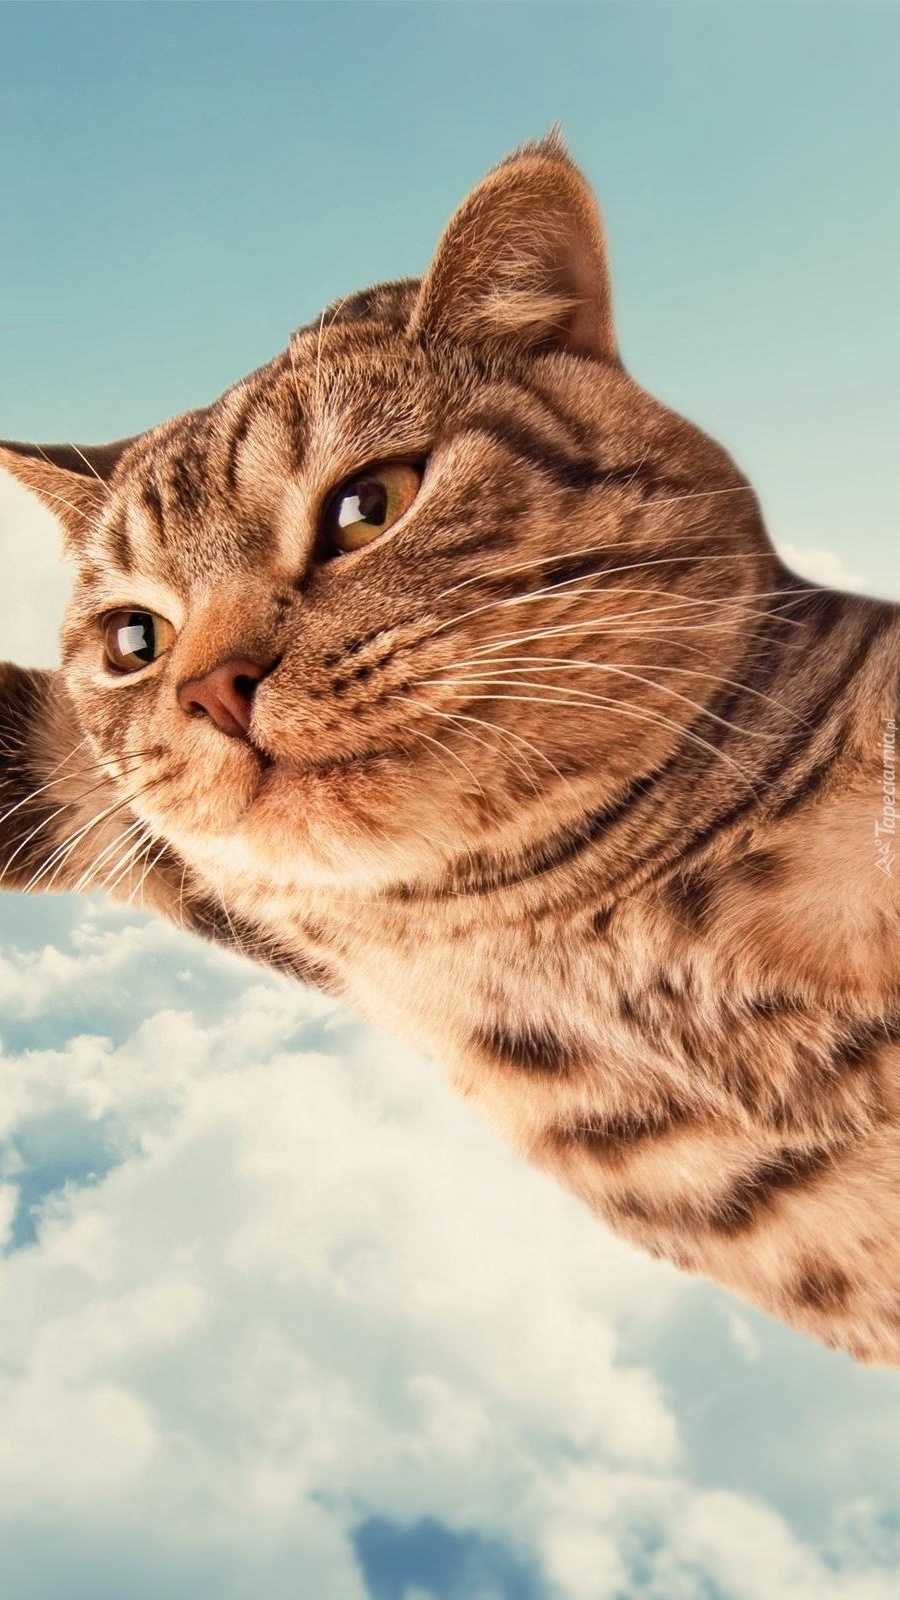 Lecący kot w chmurach